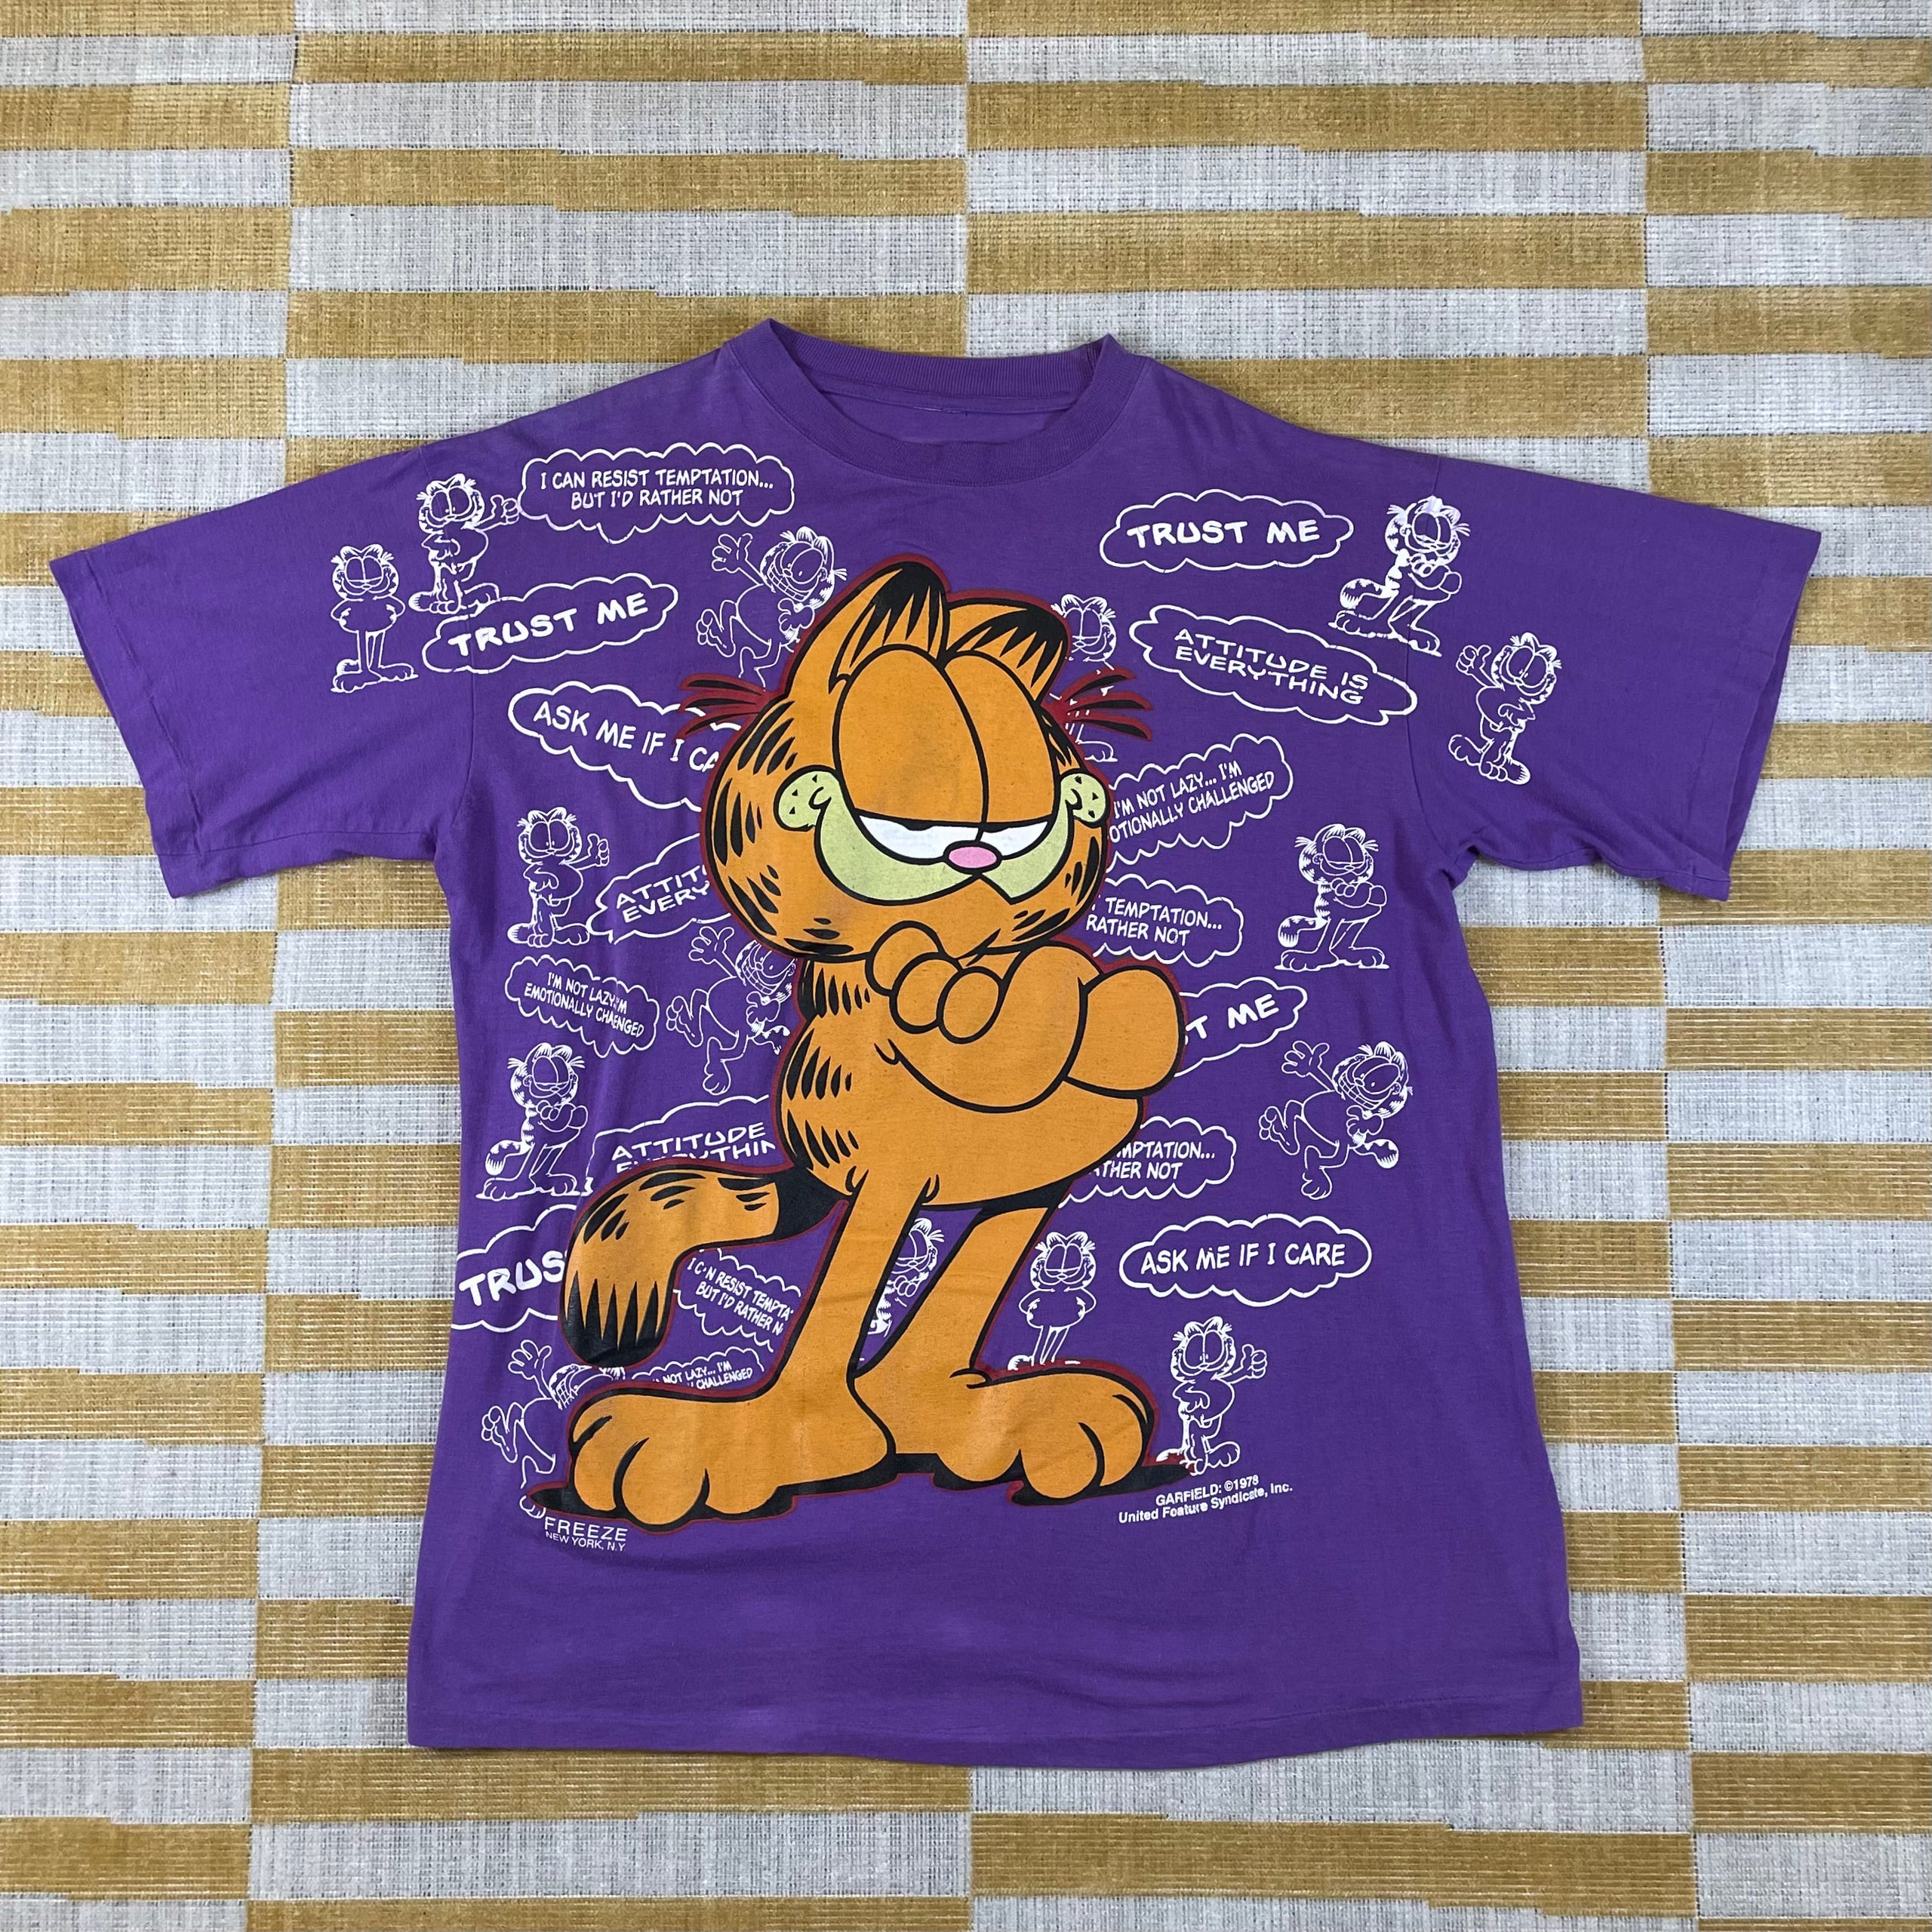 Garfield - Four Square - T-Shirt